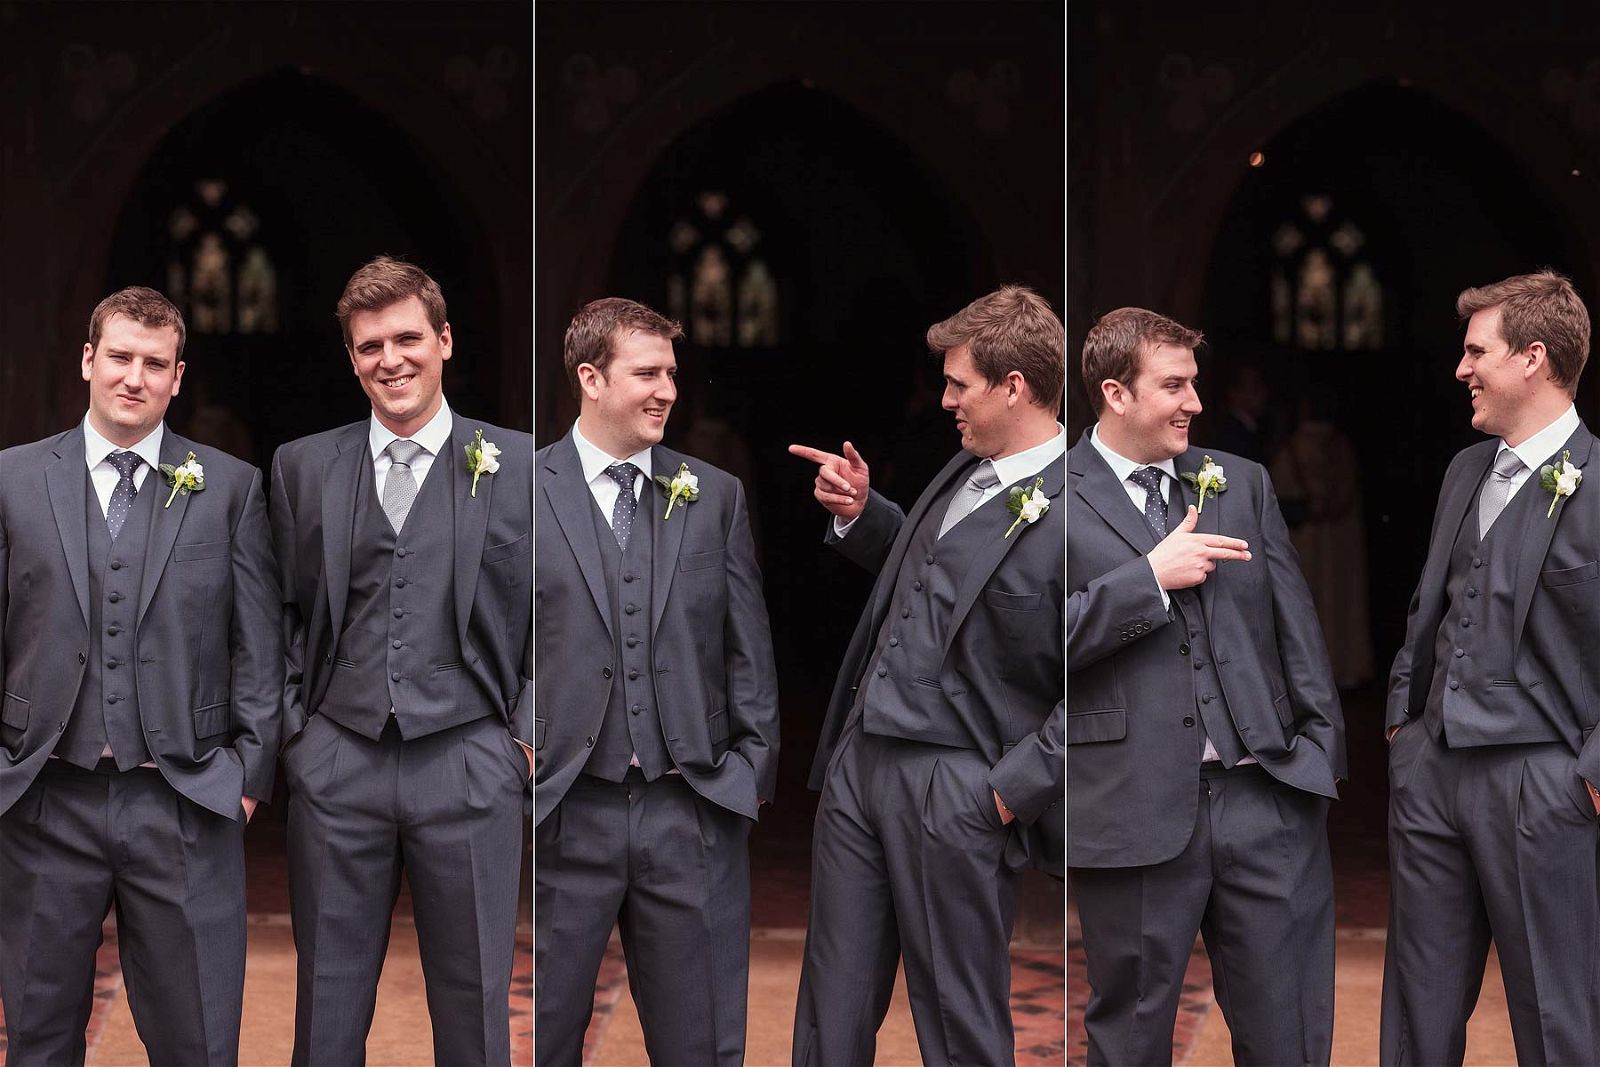 Fun contemporary groomsmen portraits at St Chads Church in Pattingham by Pattingham Wedding Photographer Stuart James